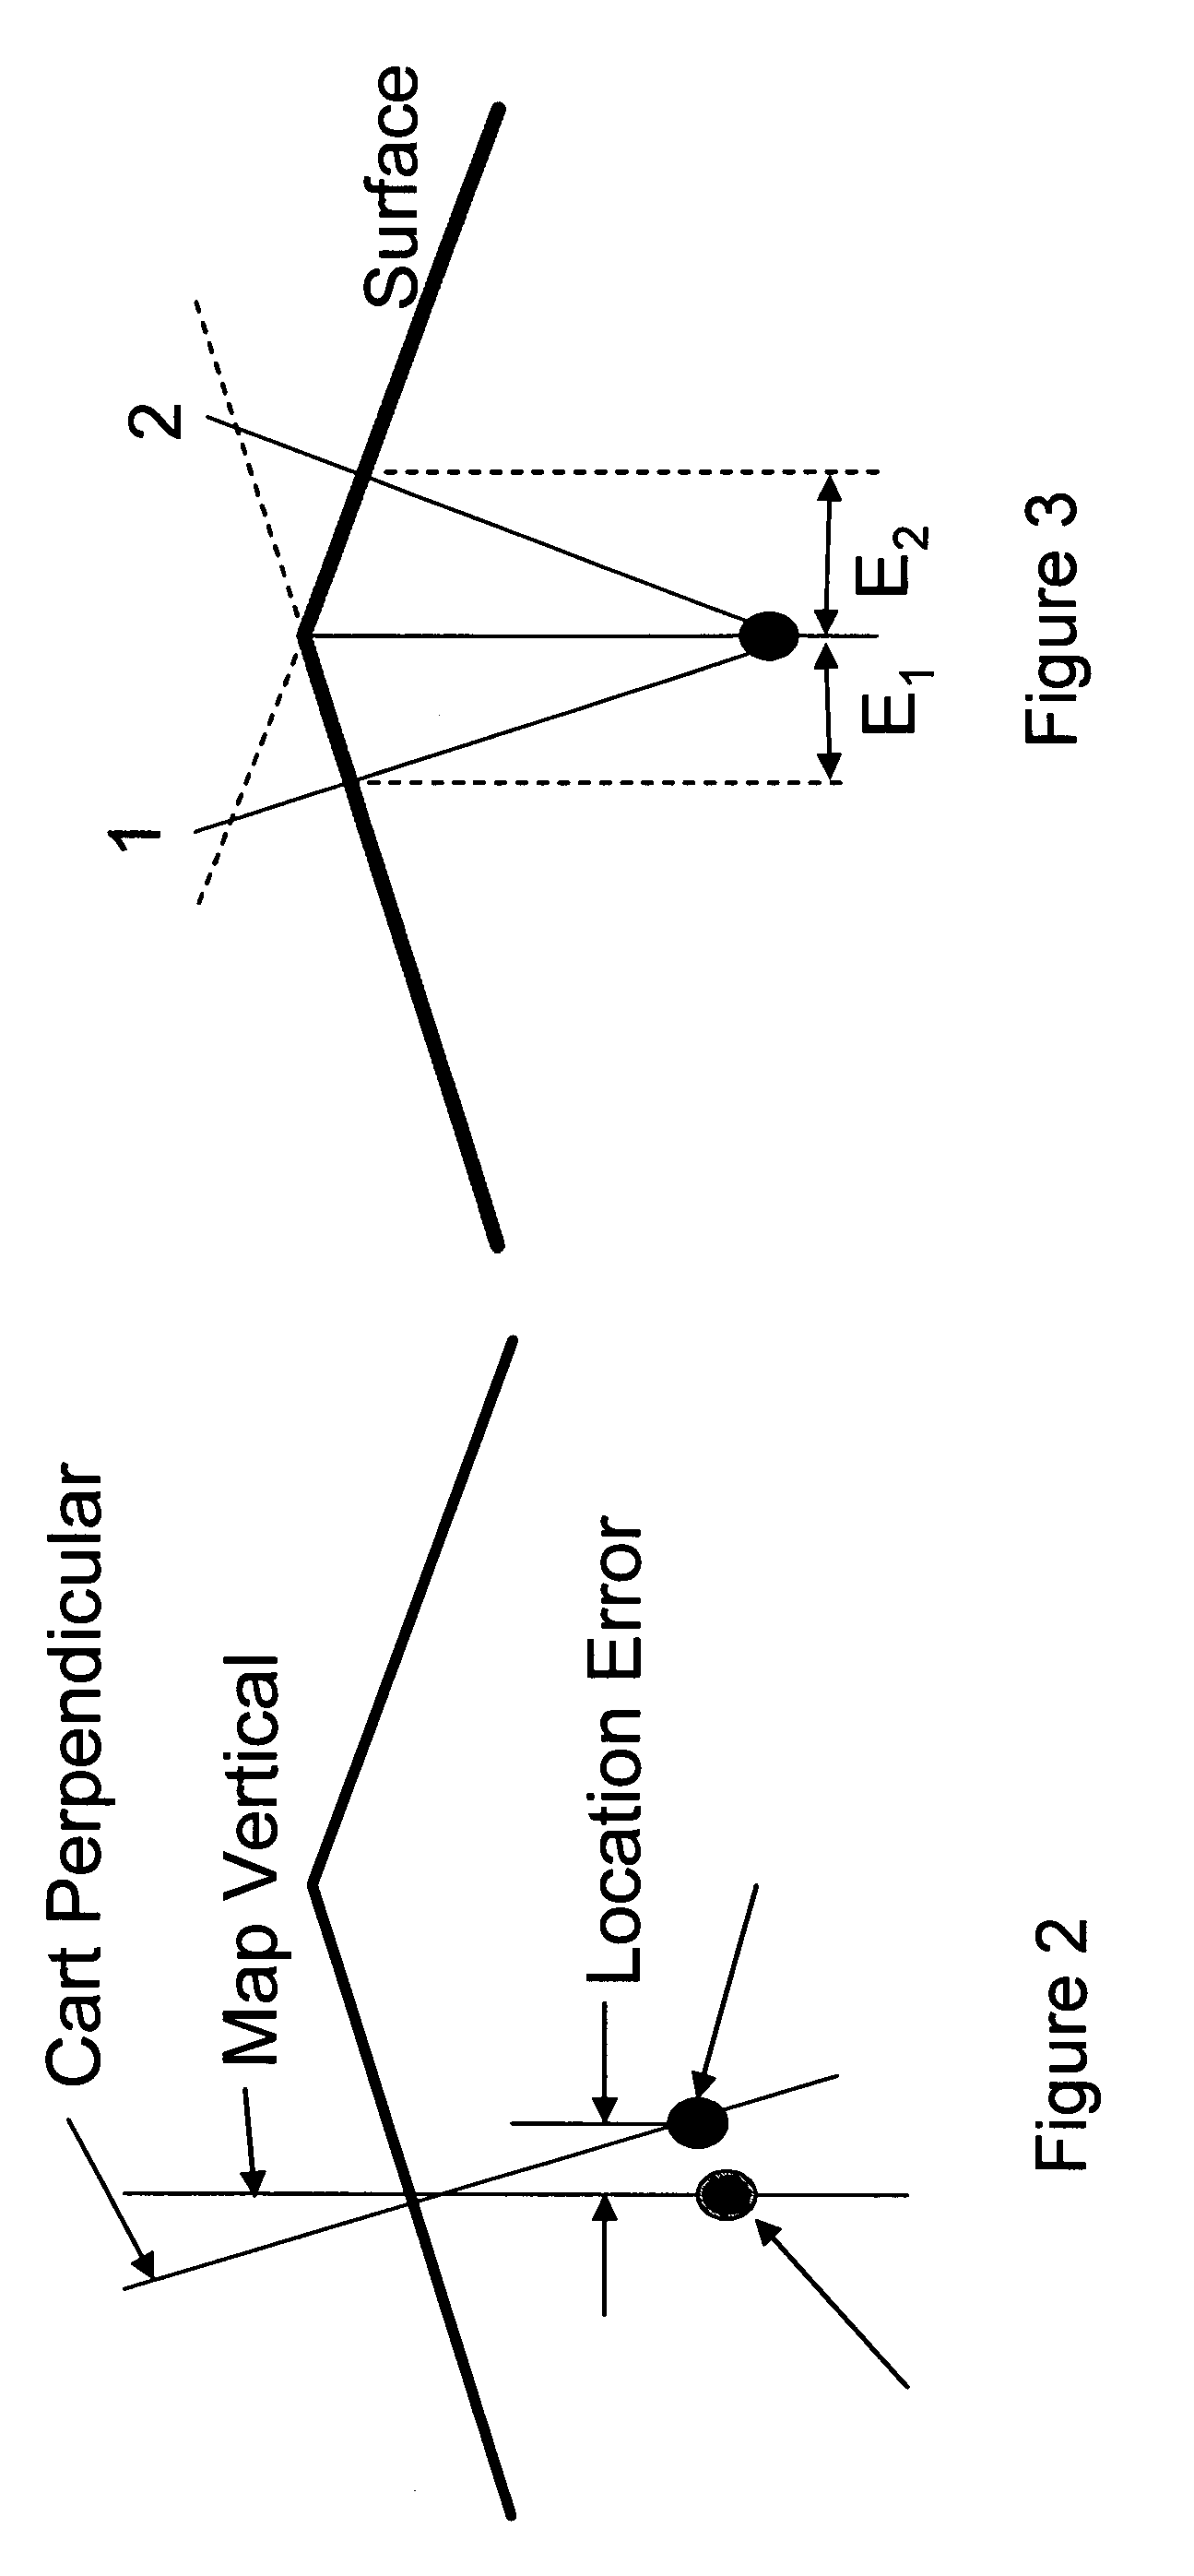 Sensor cart positioning system and method